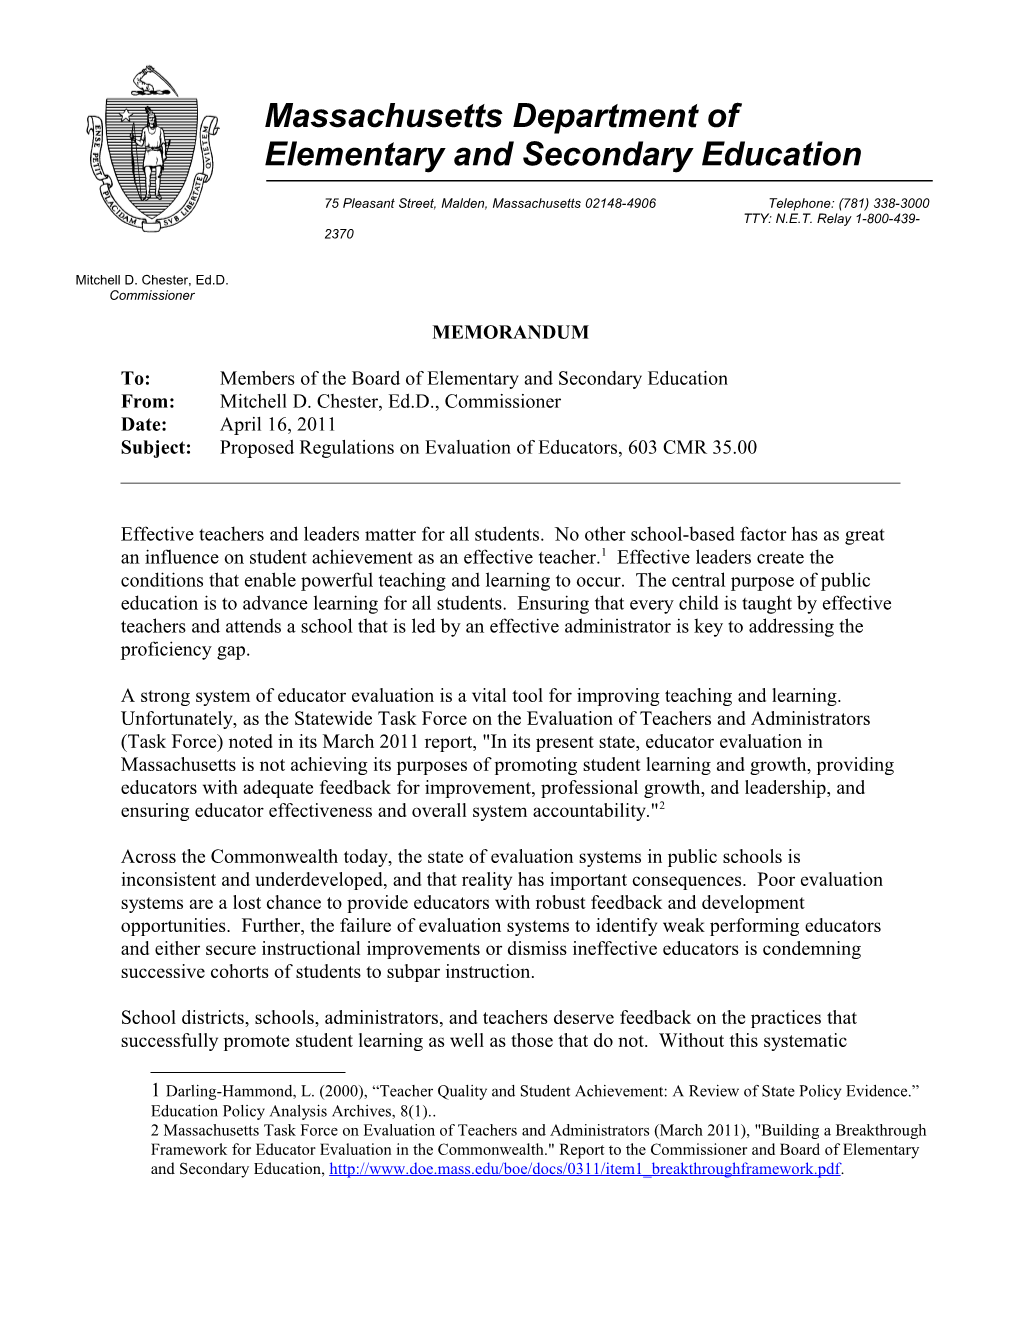 4/27/11 Board Agenda #1: Proposed Regulations on Evaluation of Educators, 603 CMR 35.00